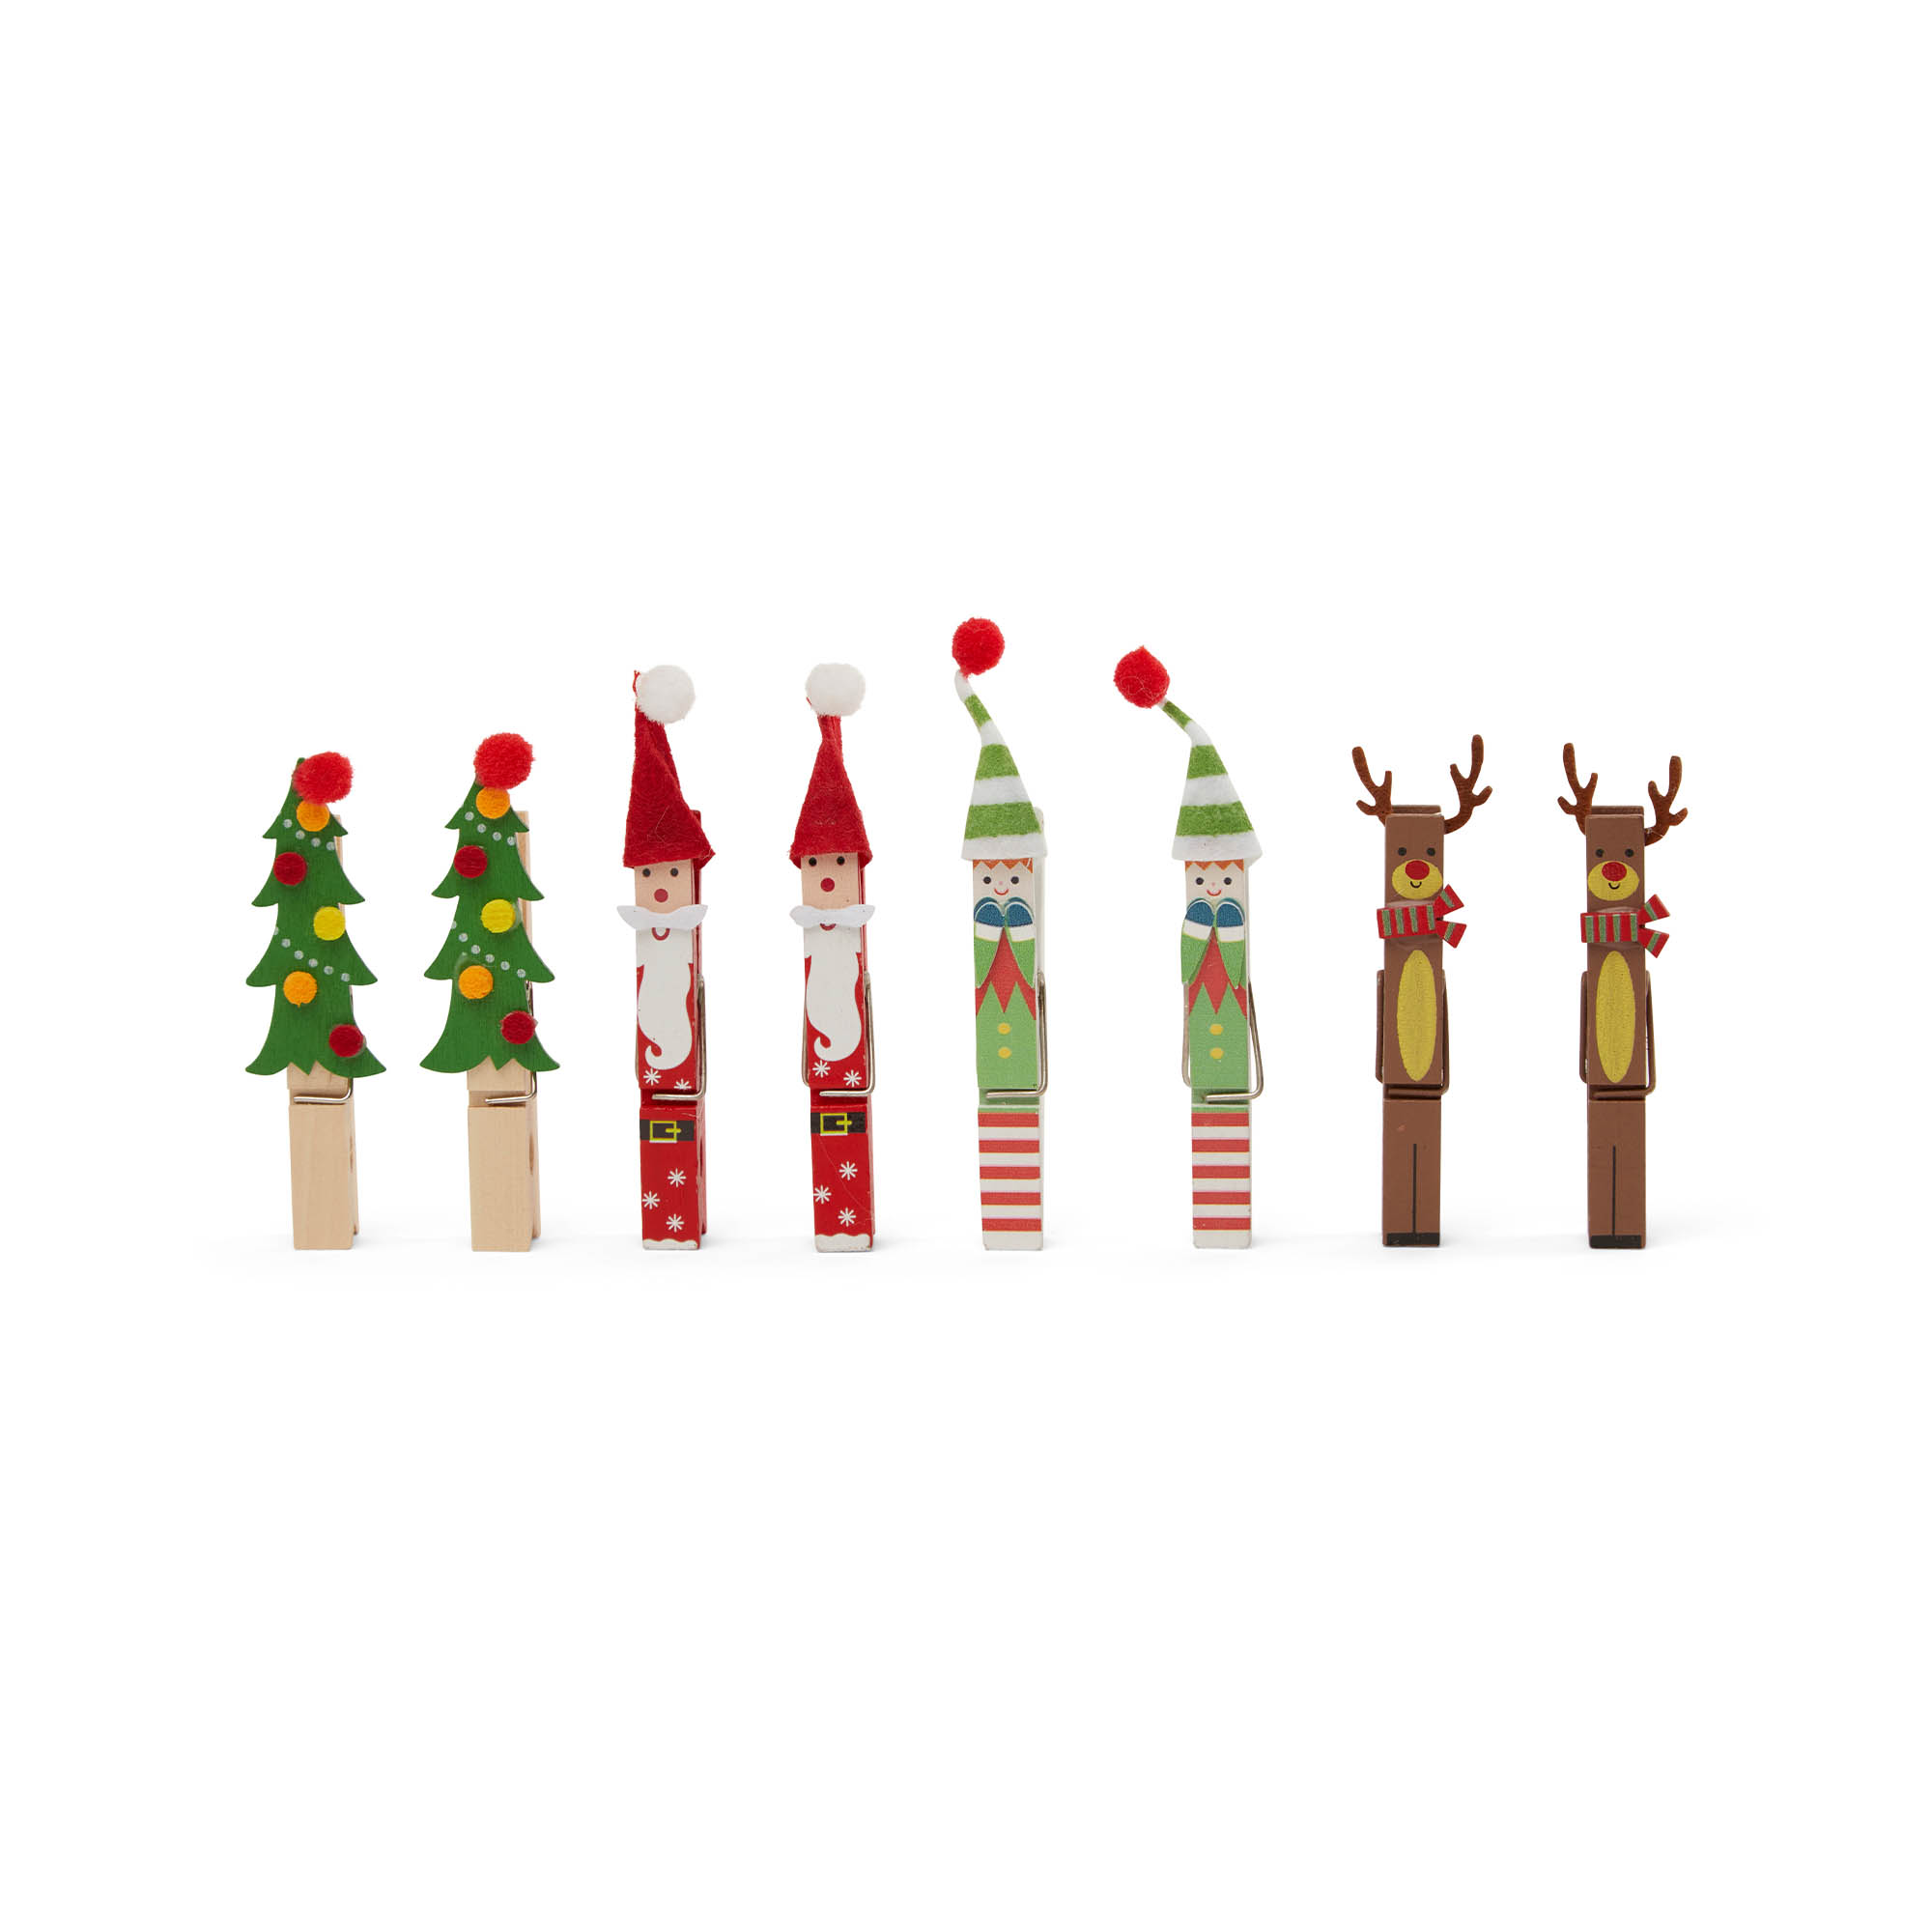 Mollette di legno natalizie - Set da 8 pz, , large